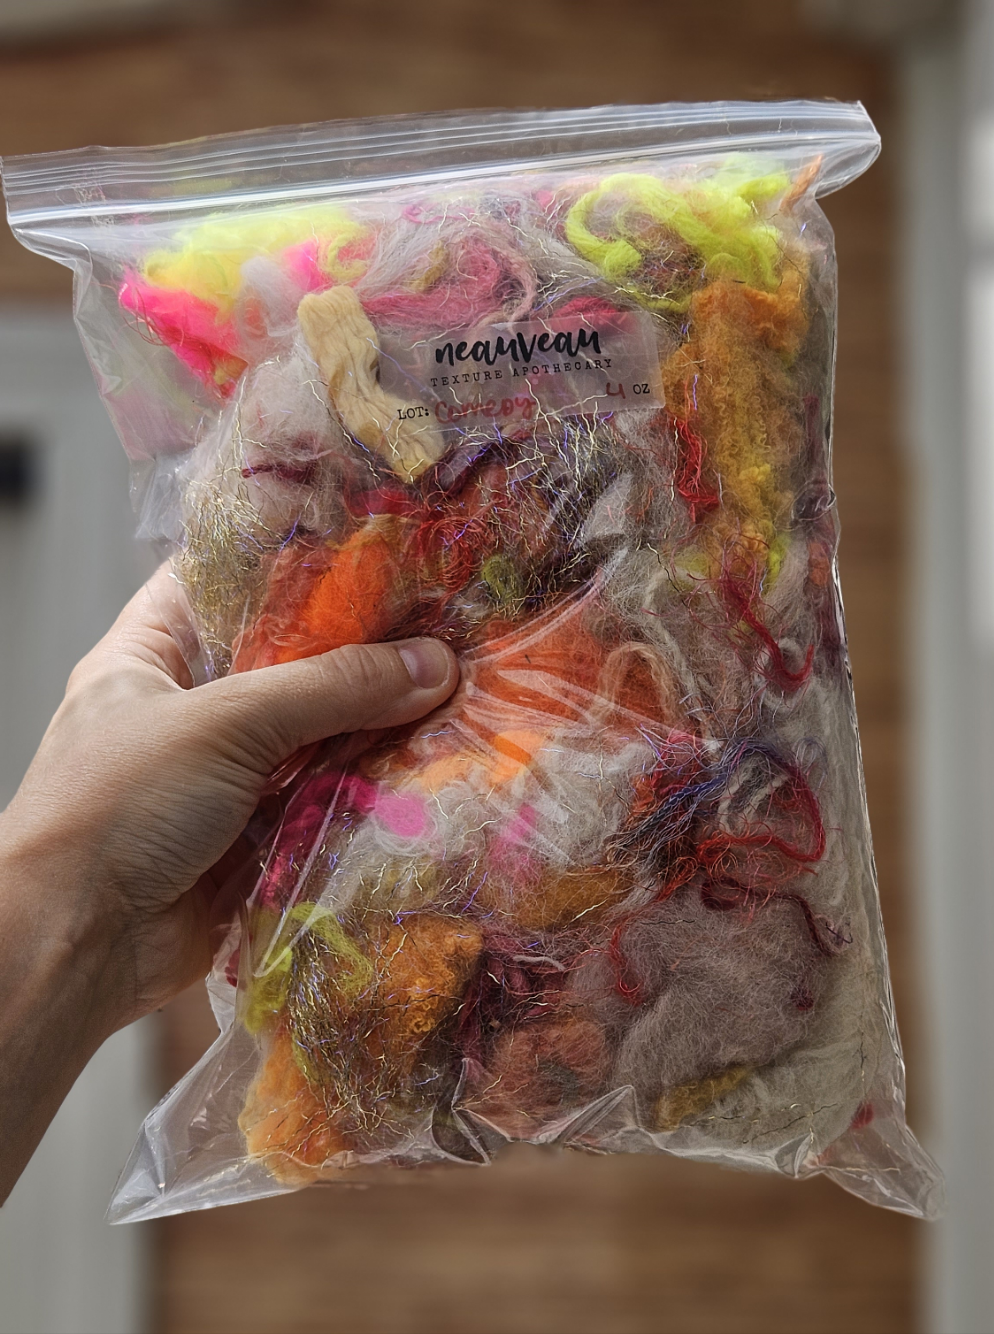 COMEDY OF ERRORS - Neauveau Fiber Art Cloud Alpaca Cotton Faux Silk Luxe Blend - 4 oz